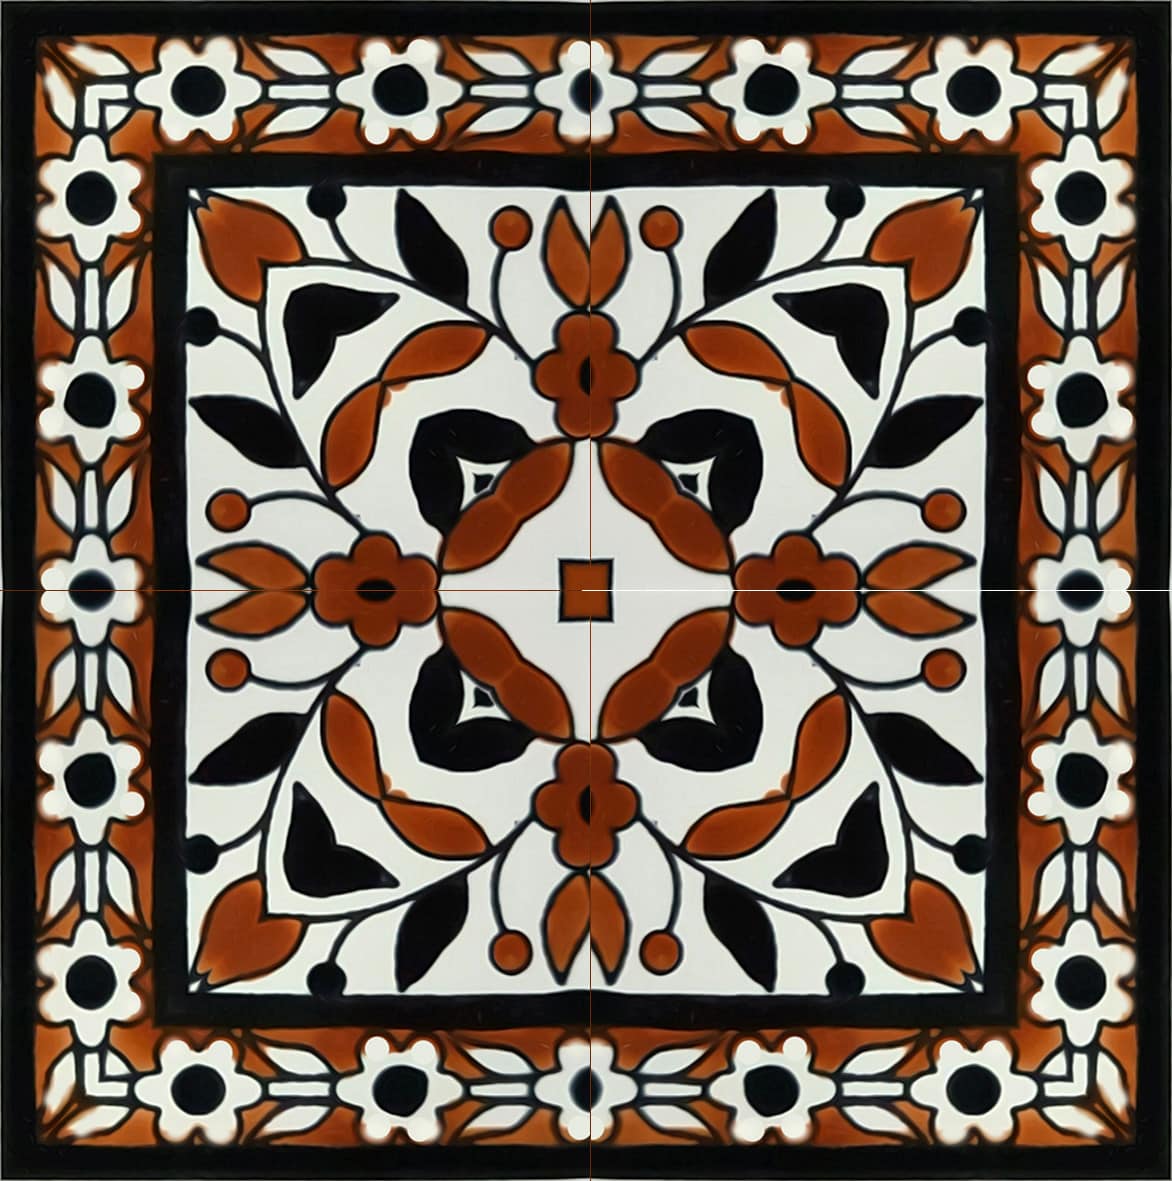 Floral brown black 15x15cm tile pattern